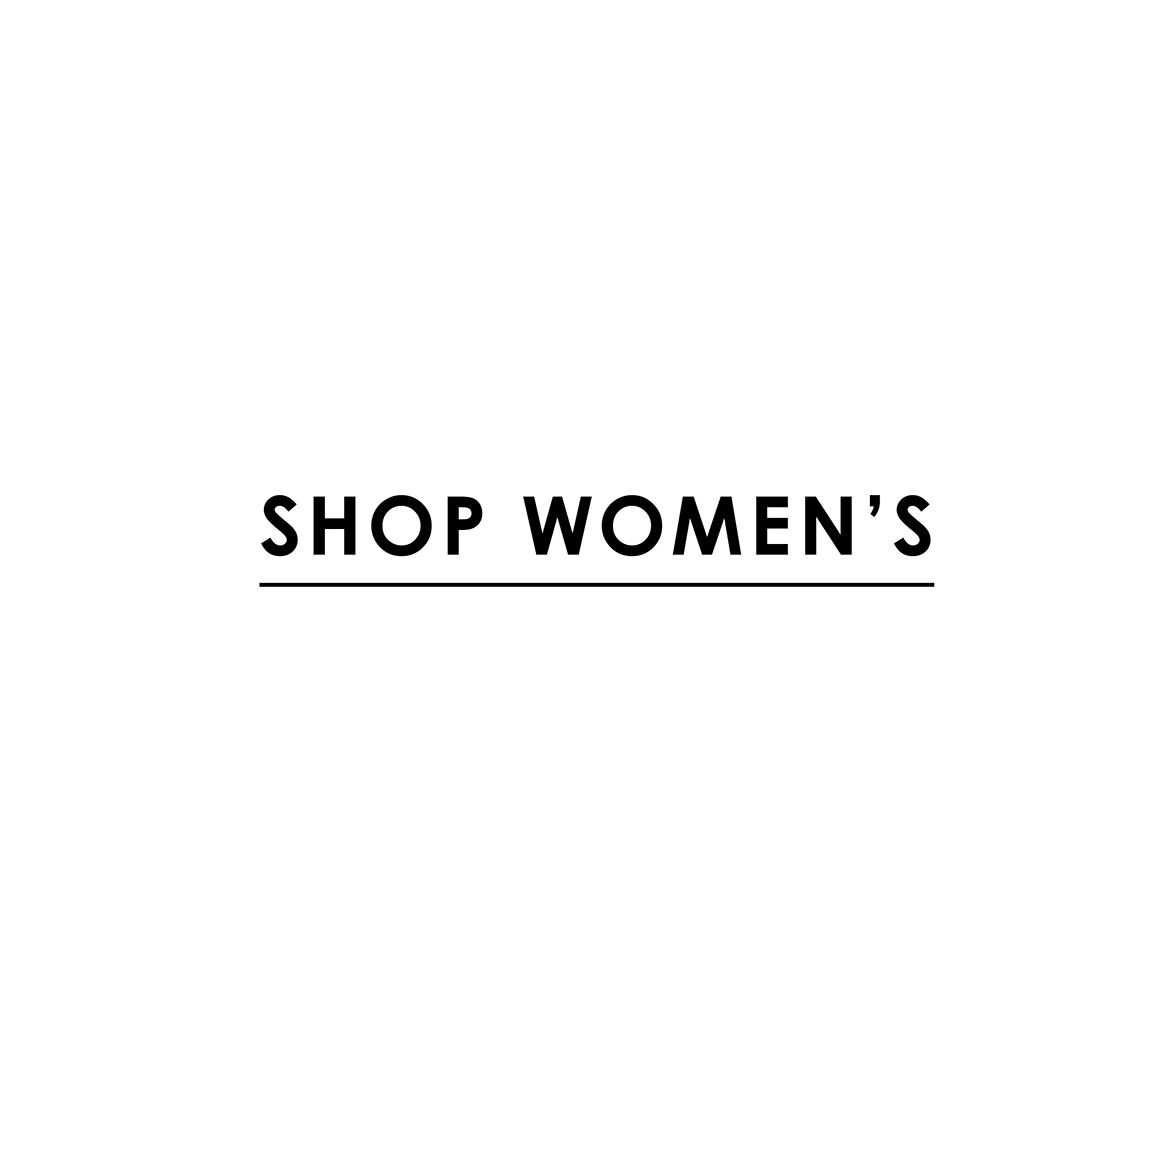 Shop Women's New Arrivals